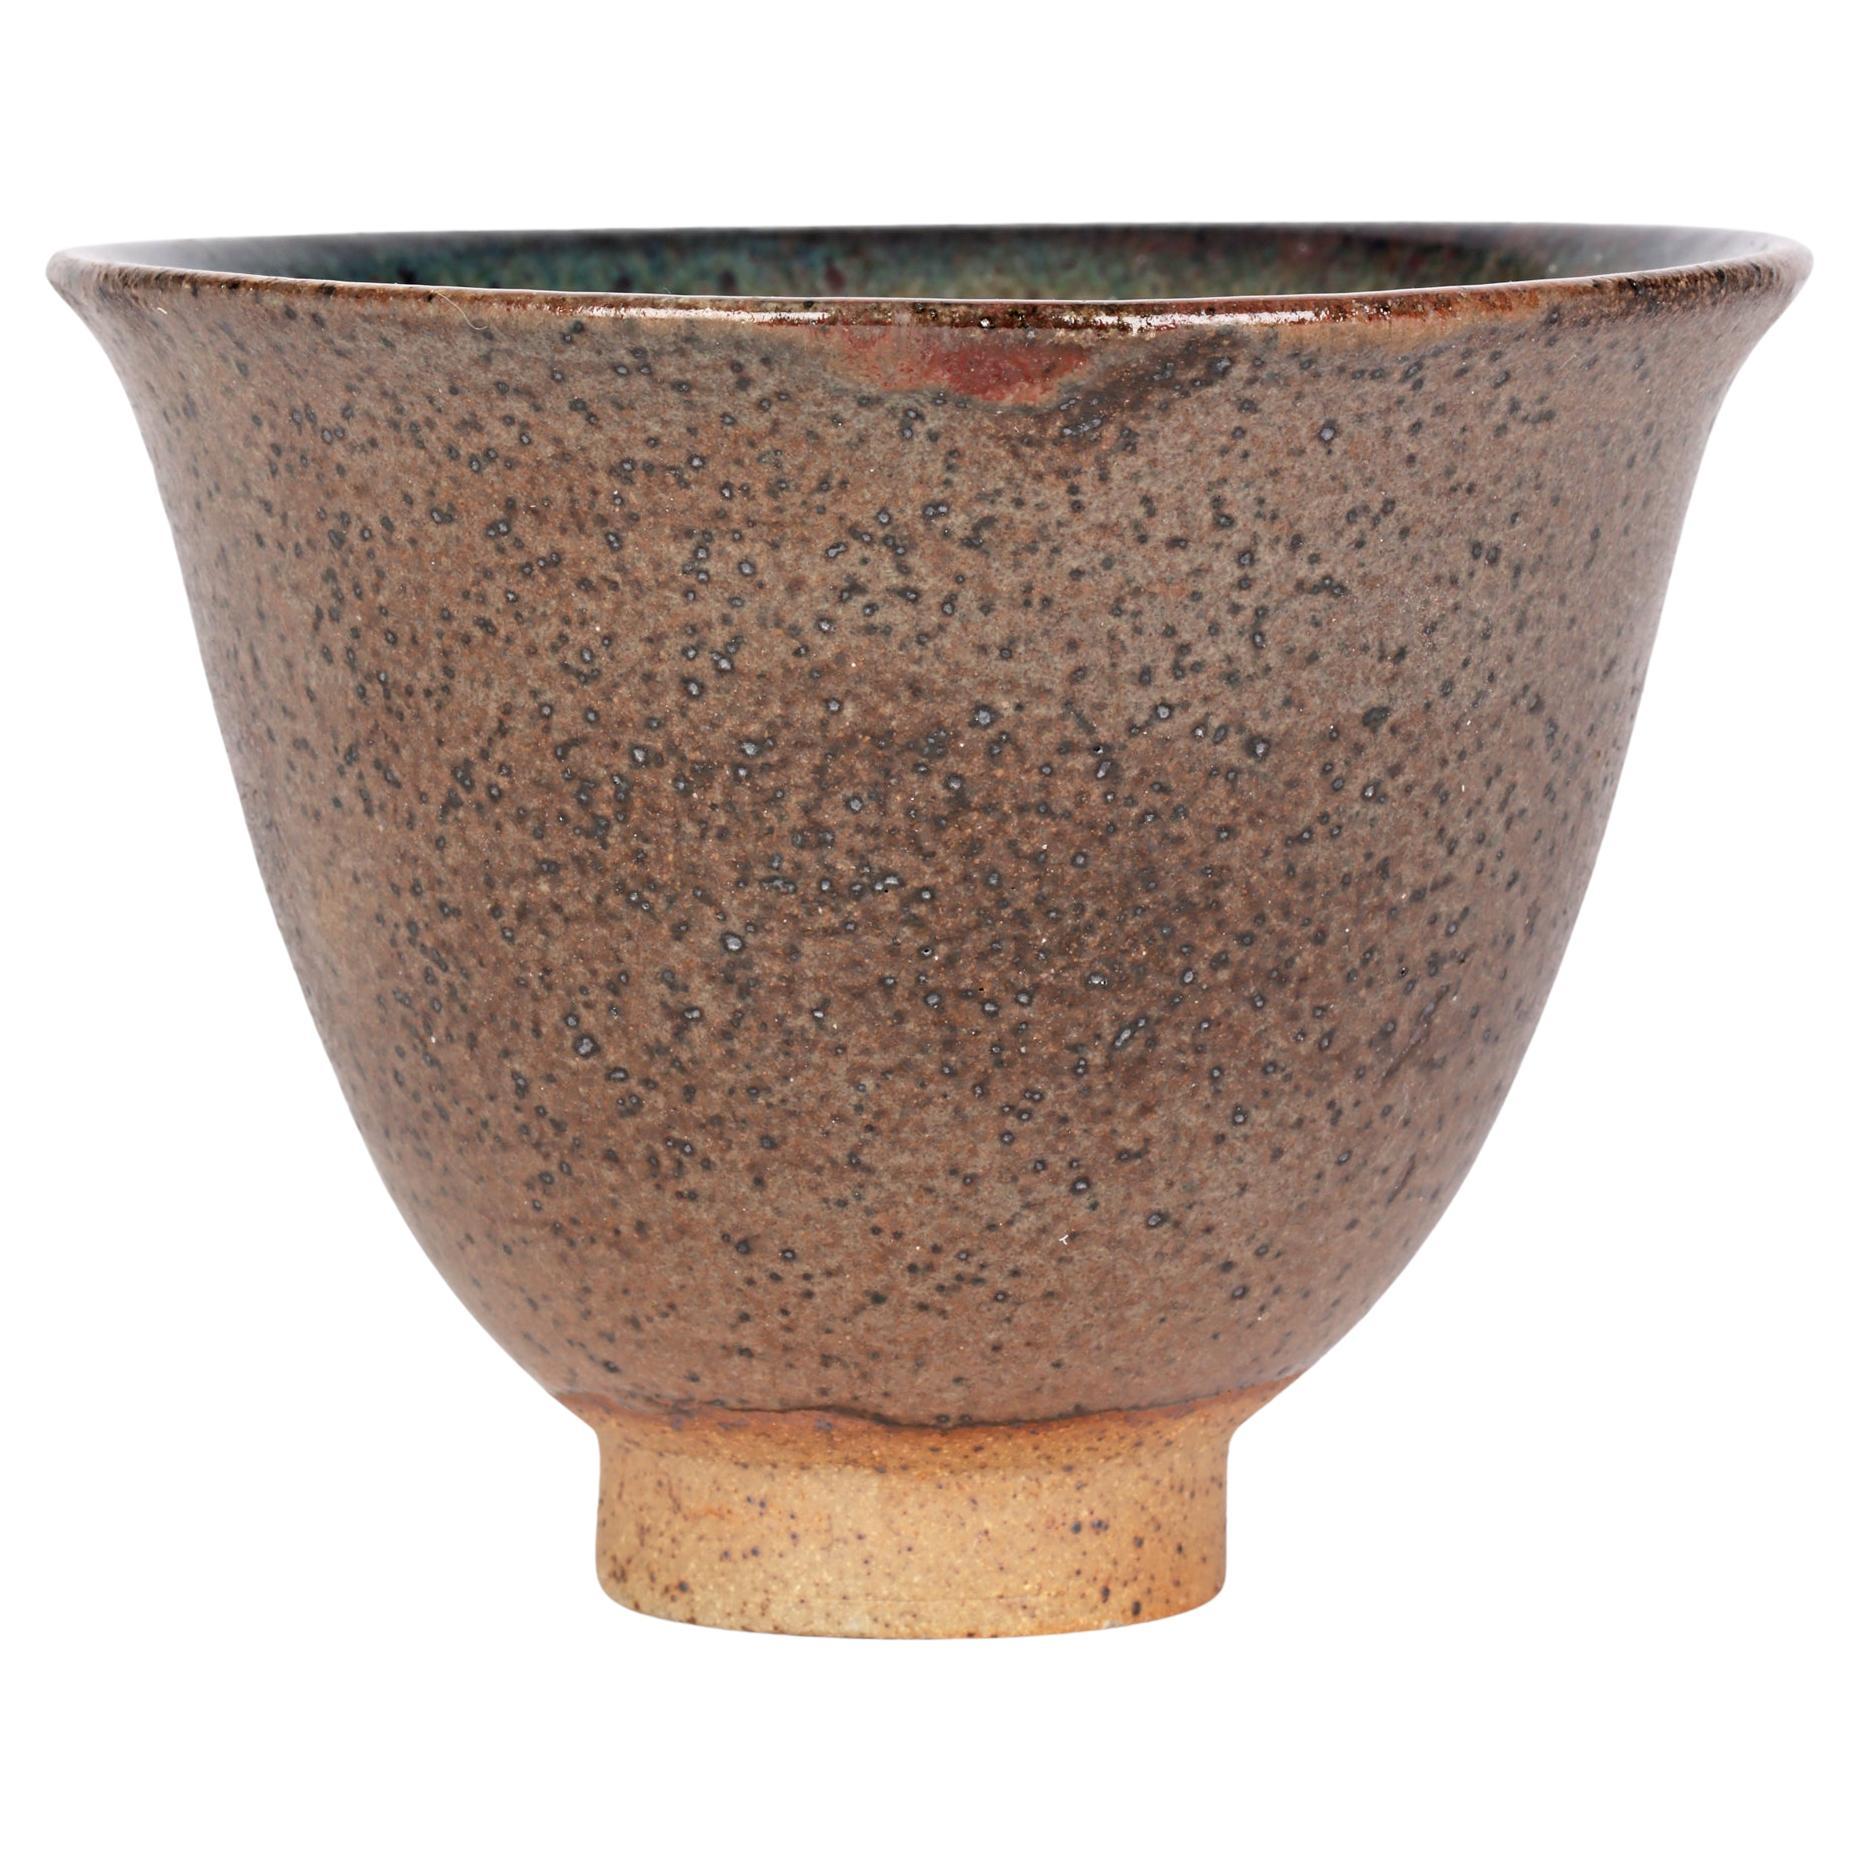 Eric James Mellon Studio Pottery Experimental Glazed Cup 2006  For Sale